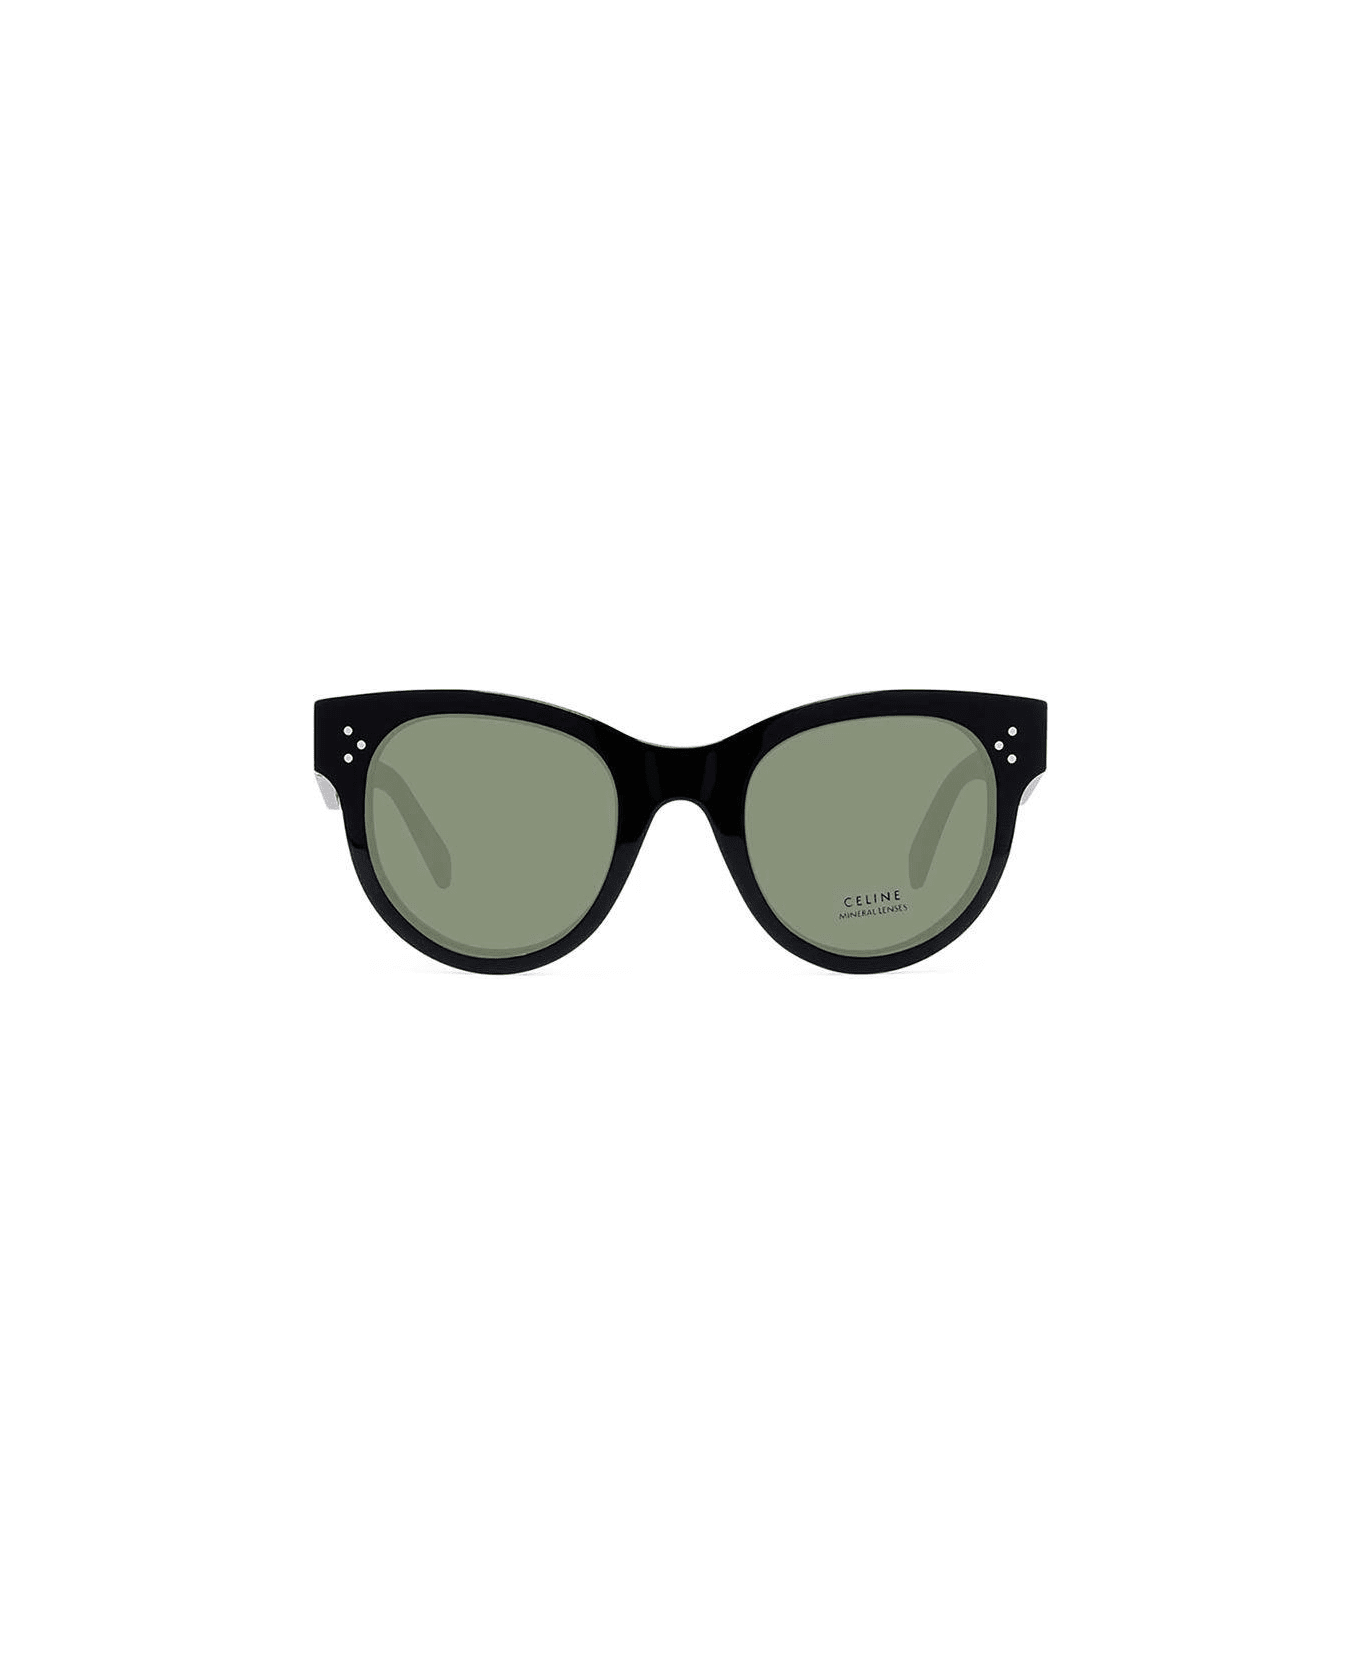 Celine Round Frame Sunglasses - 01a サングラス